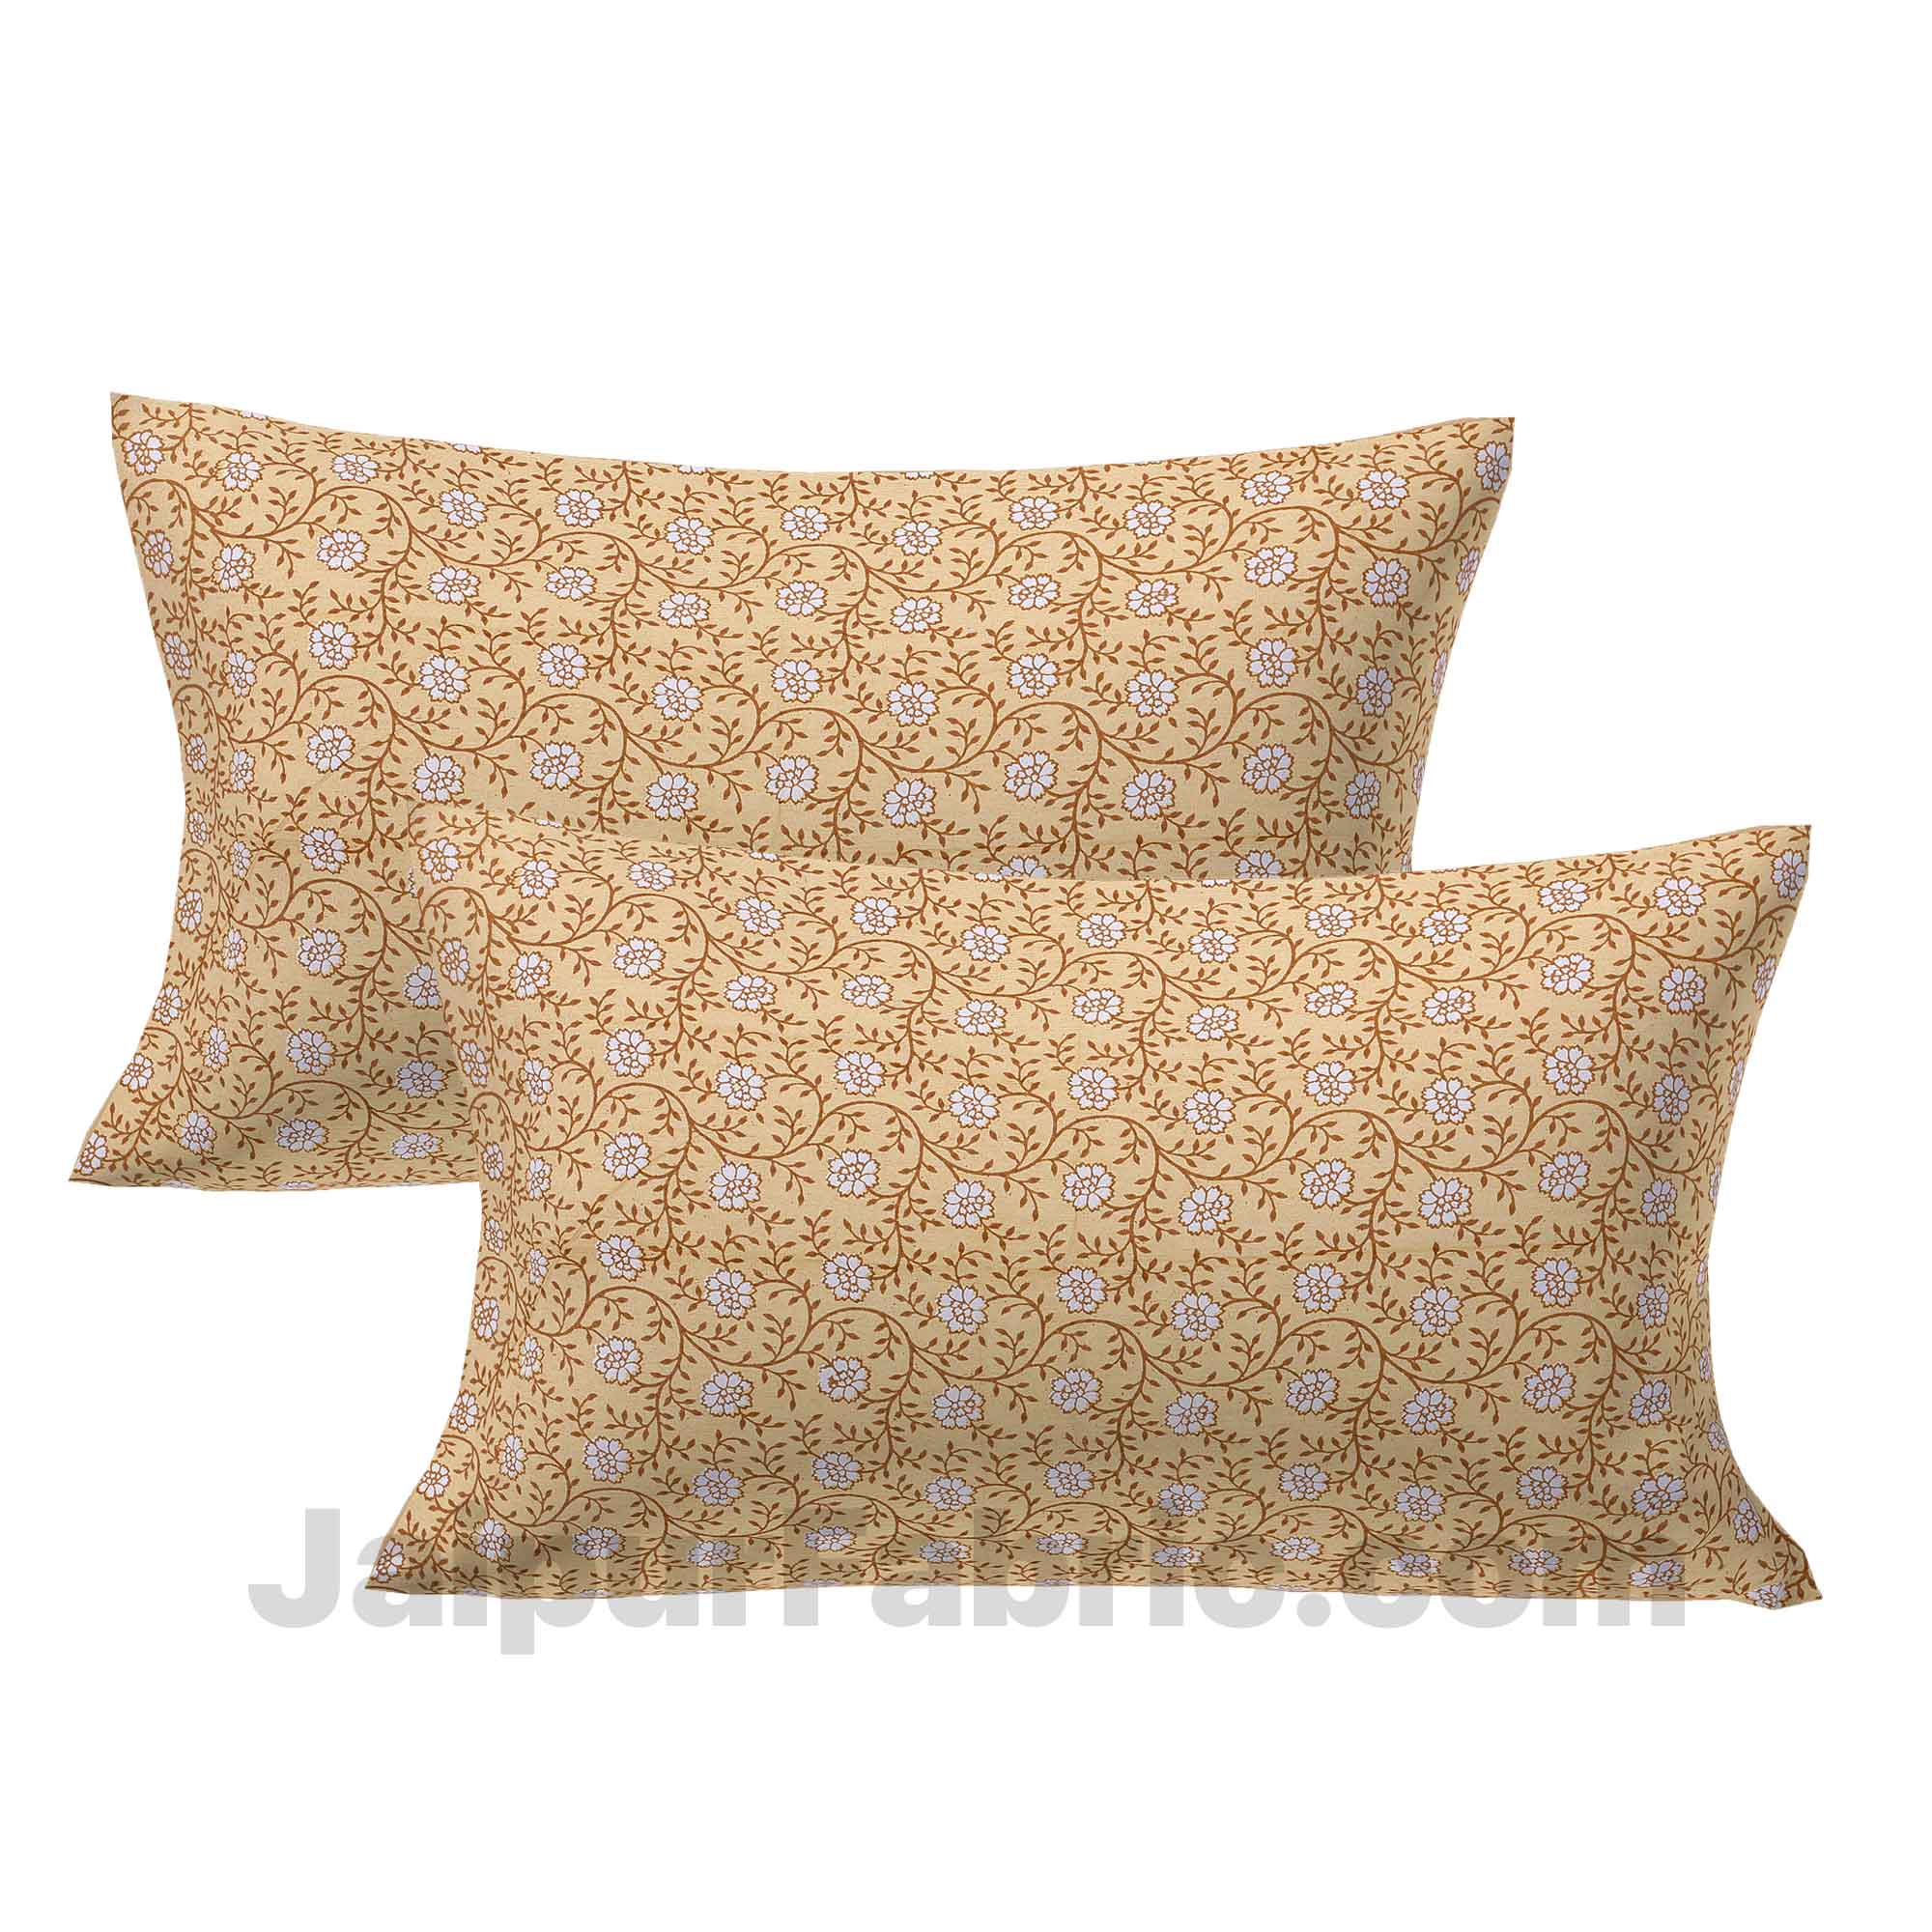 Pure Cotton Yellow Golden Color Small Floral Jaipuri Procian Bedsheet